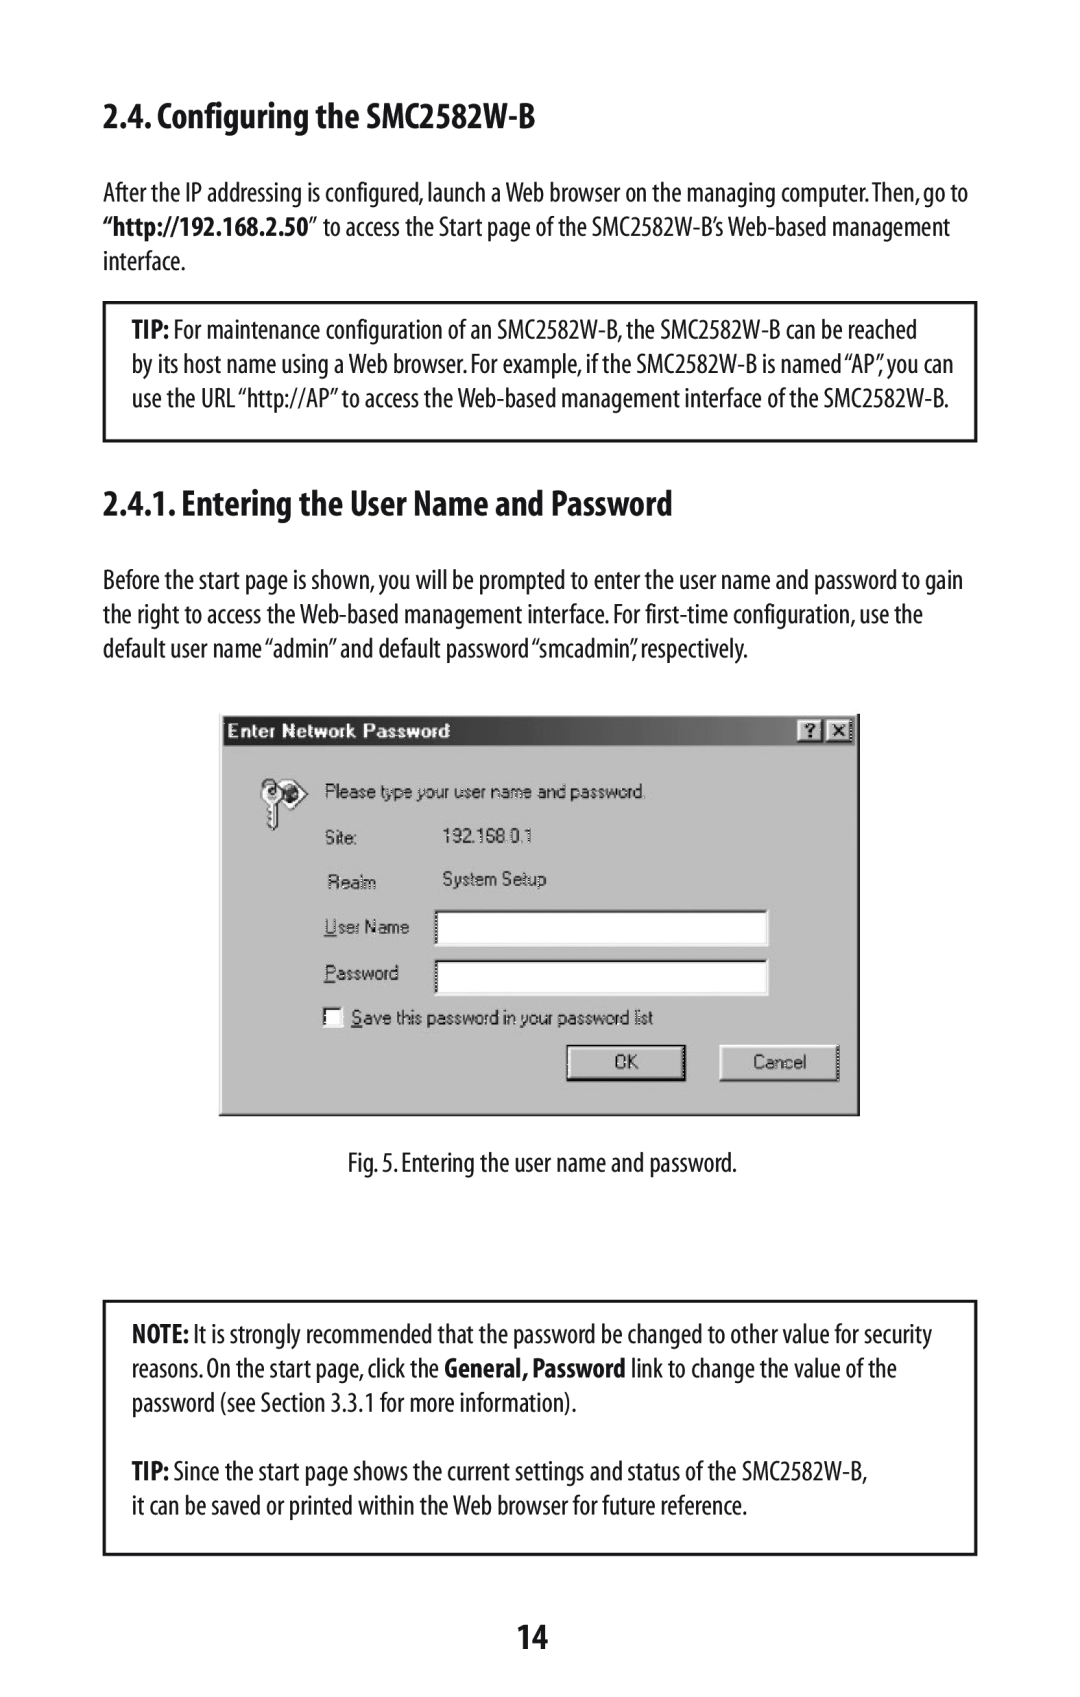 SMC Networks manual Configuring the SMC2582W-B, Entering the User Name and Password, Entering the user name and password 